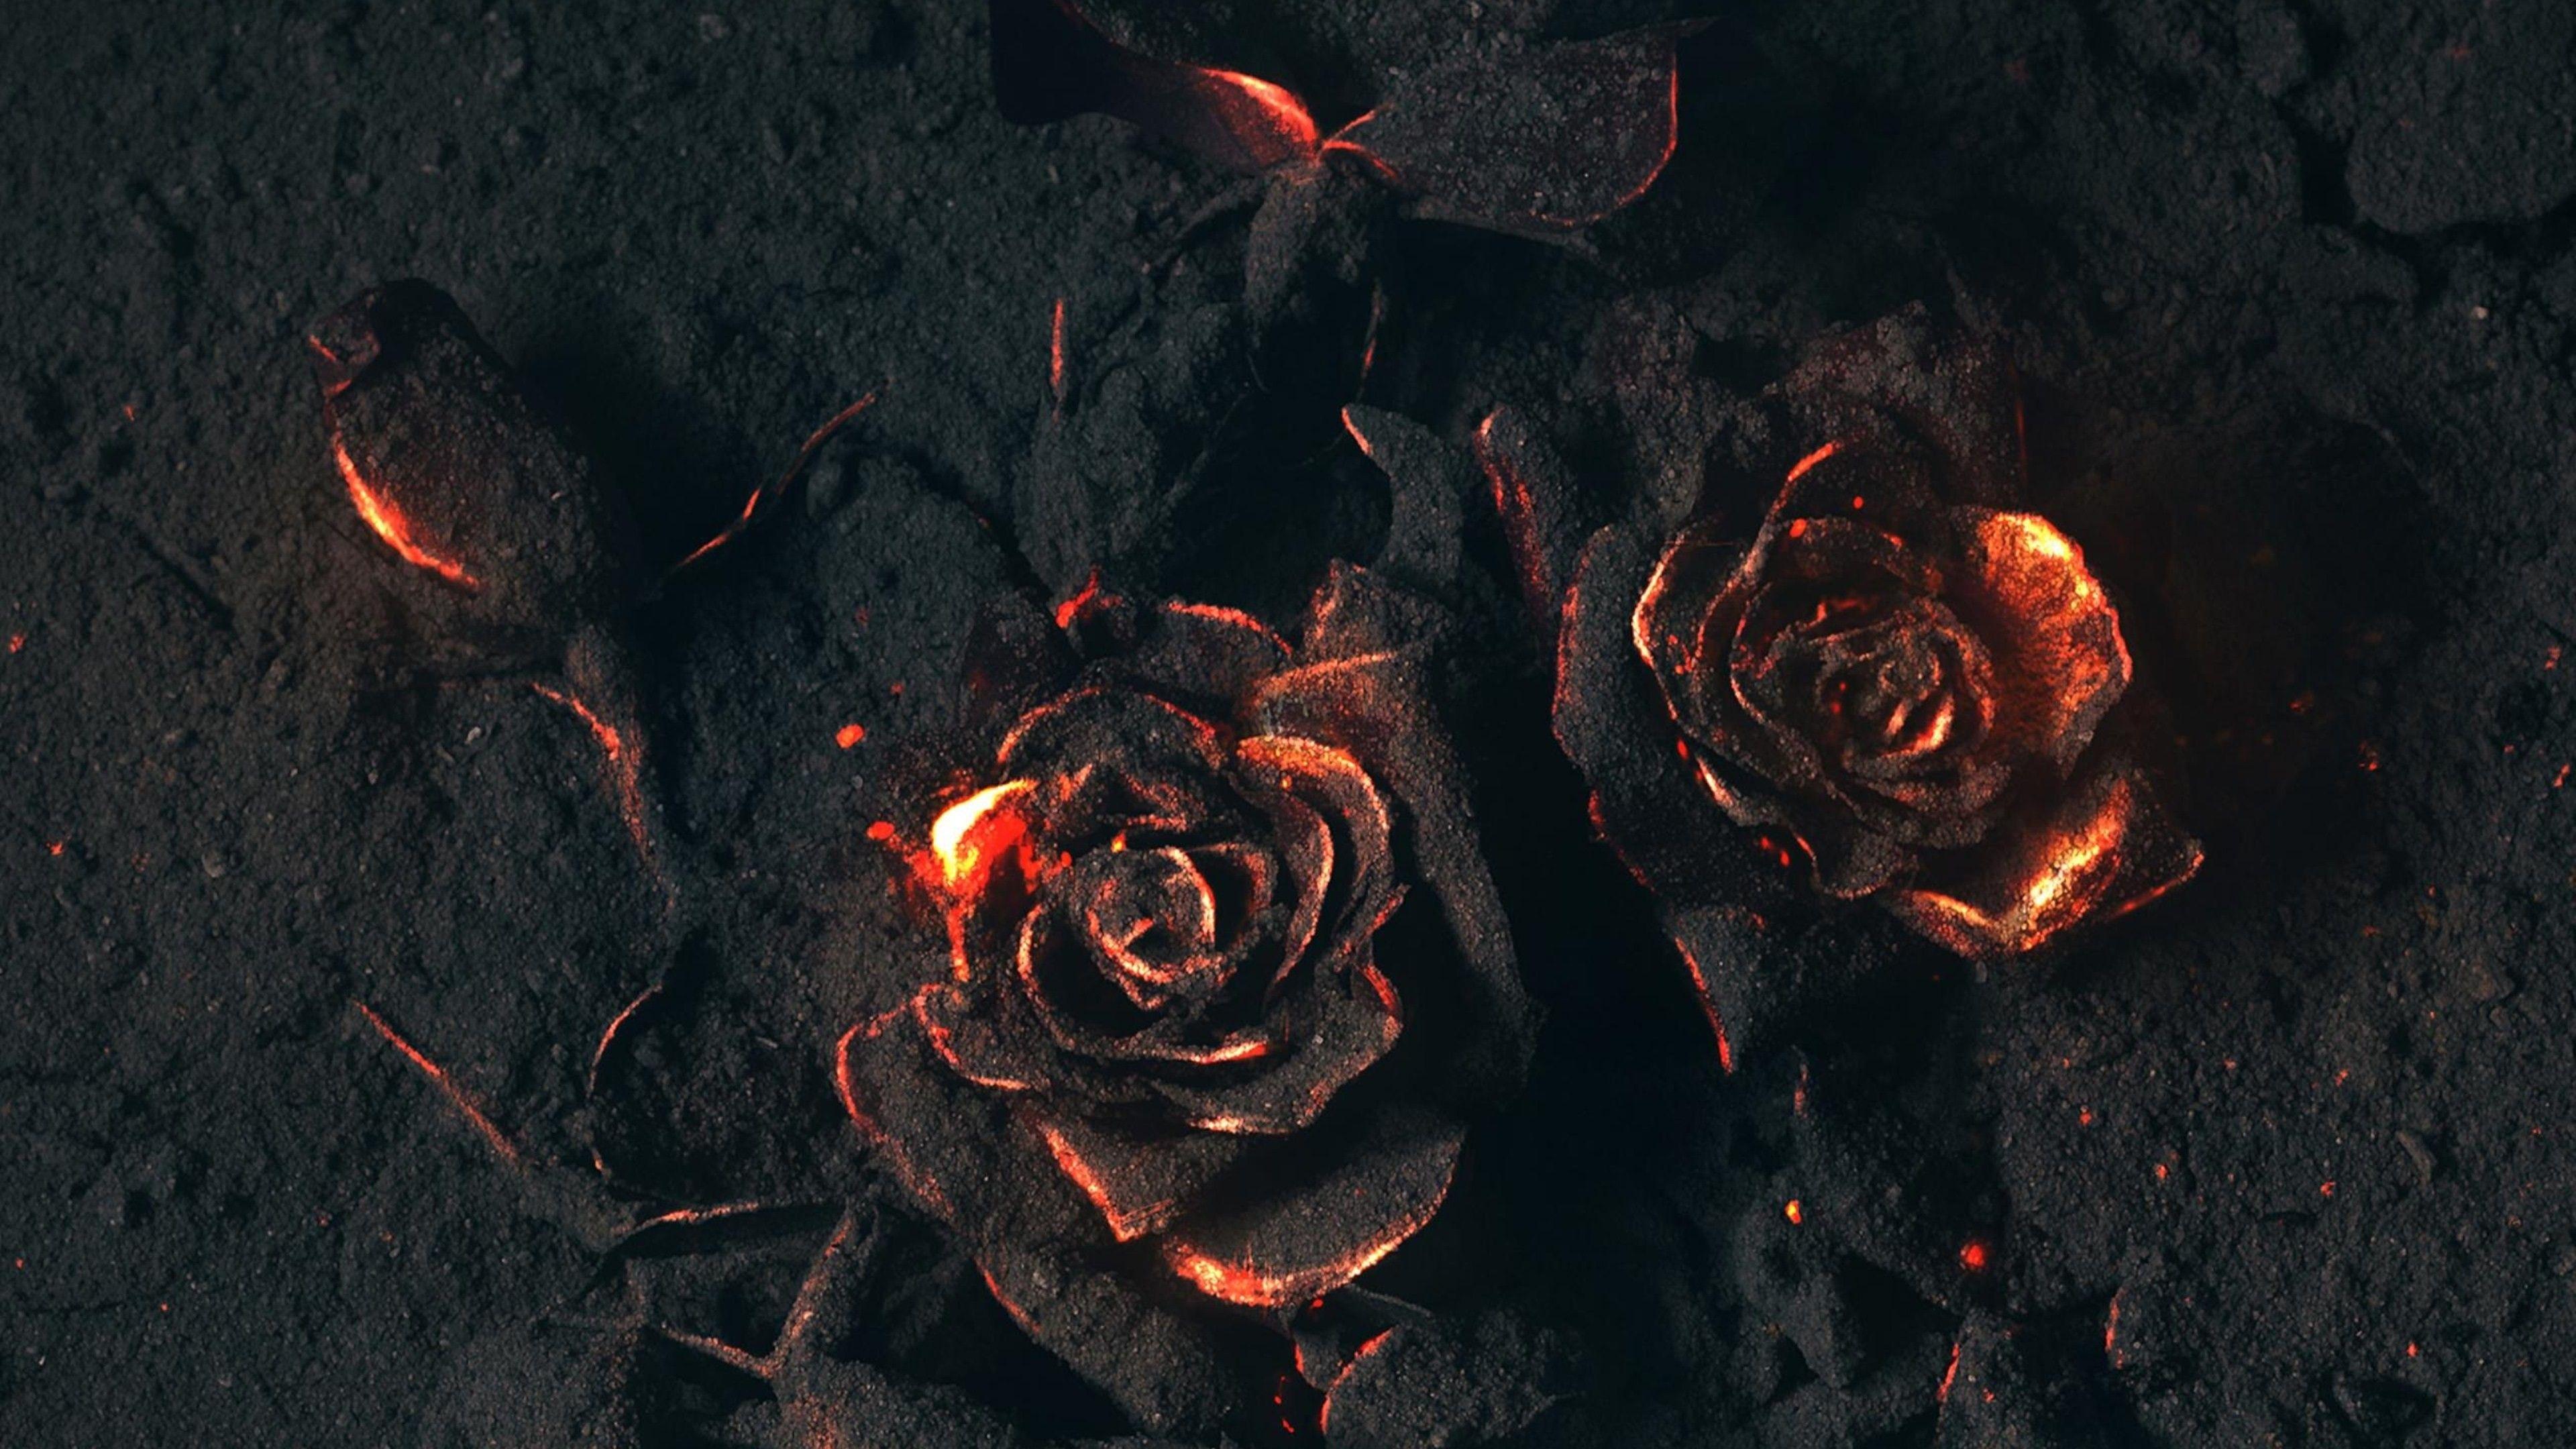 Black Roses 4K Wallpapers - Top Free Black Roses 4K Backgrounds